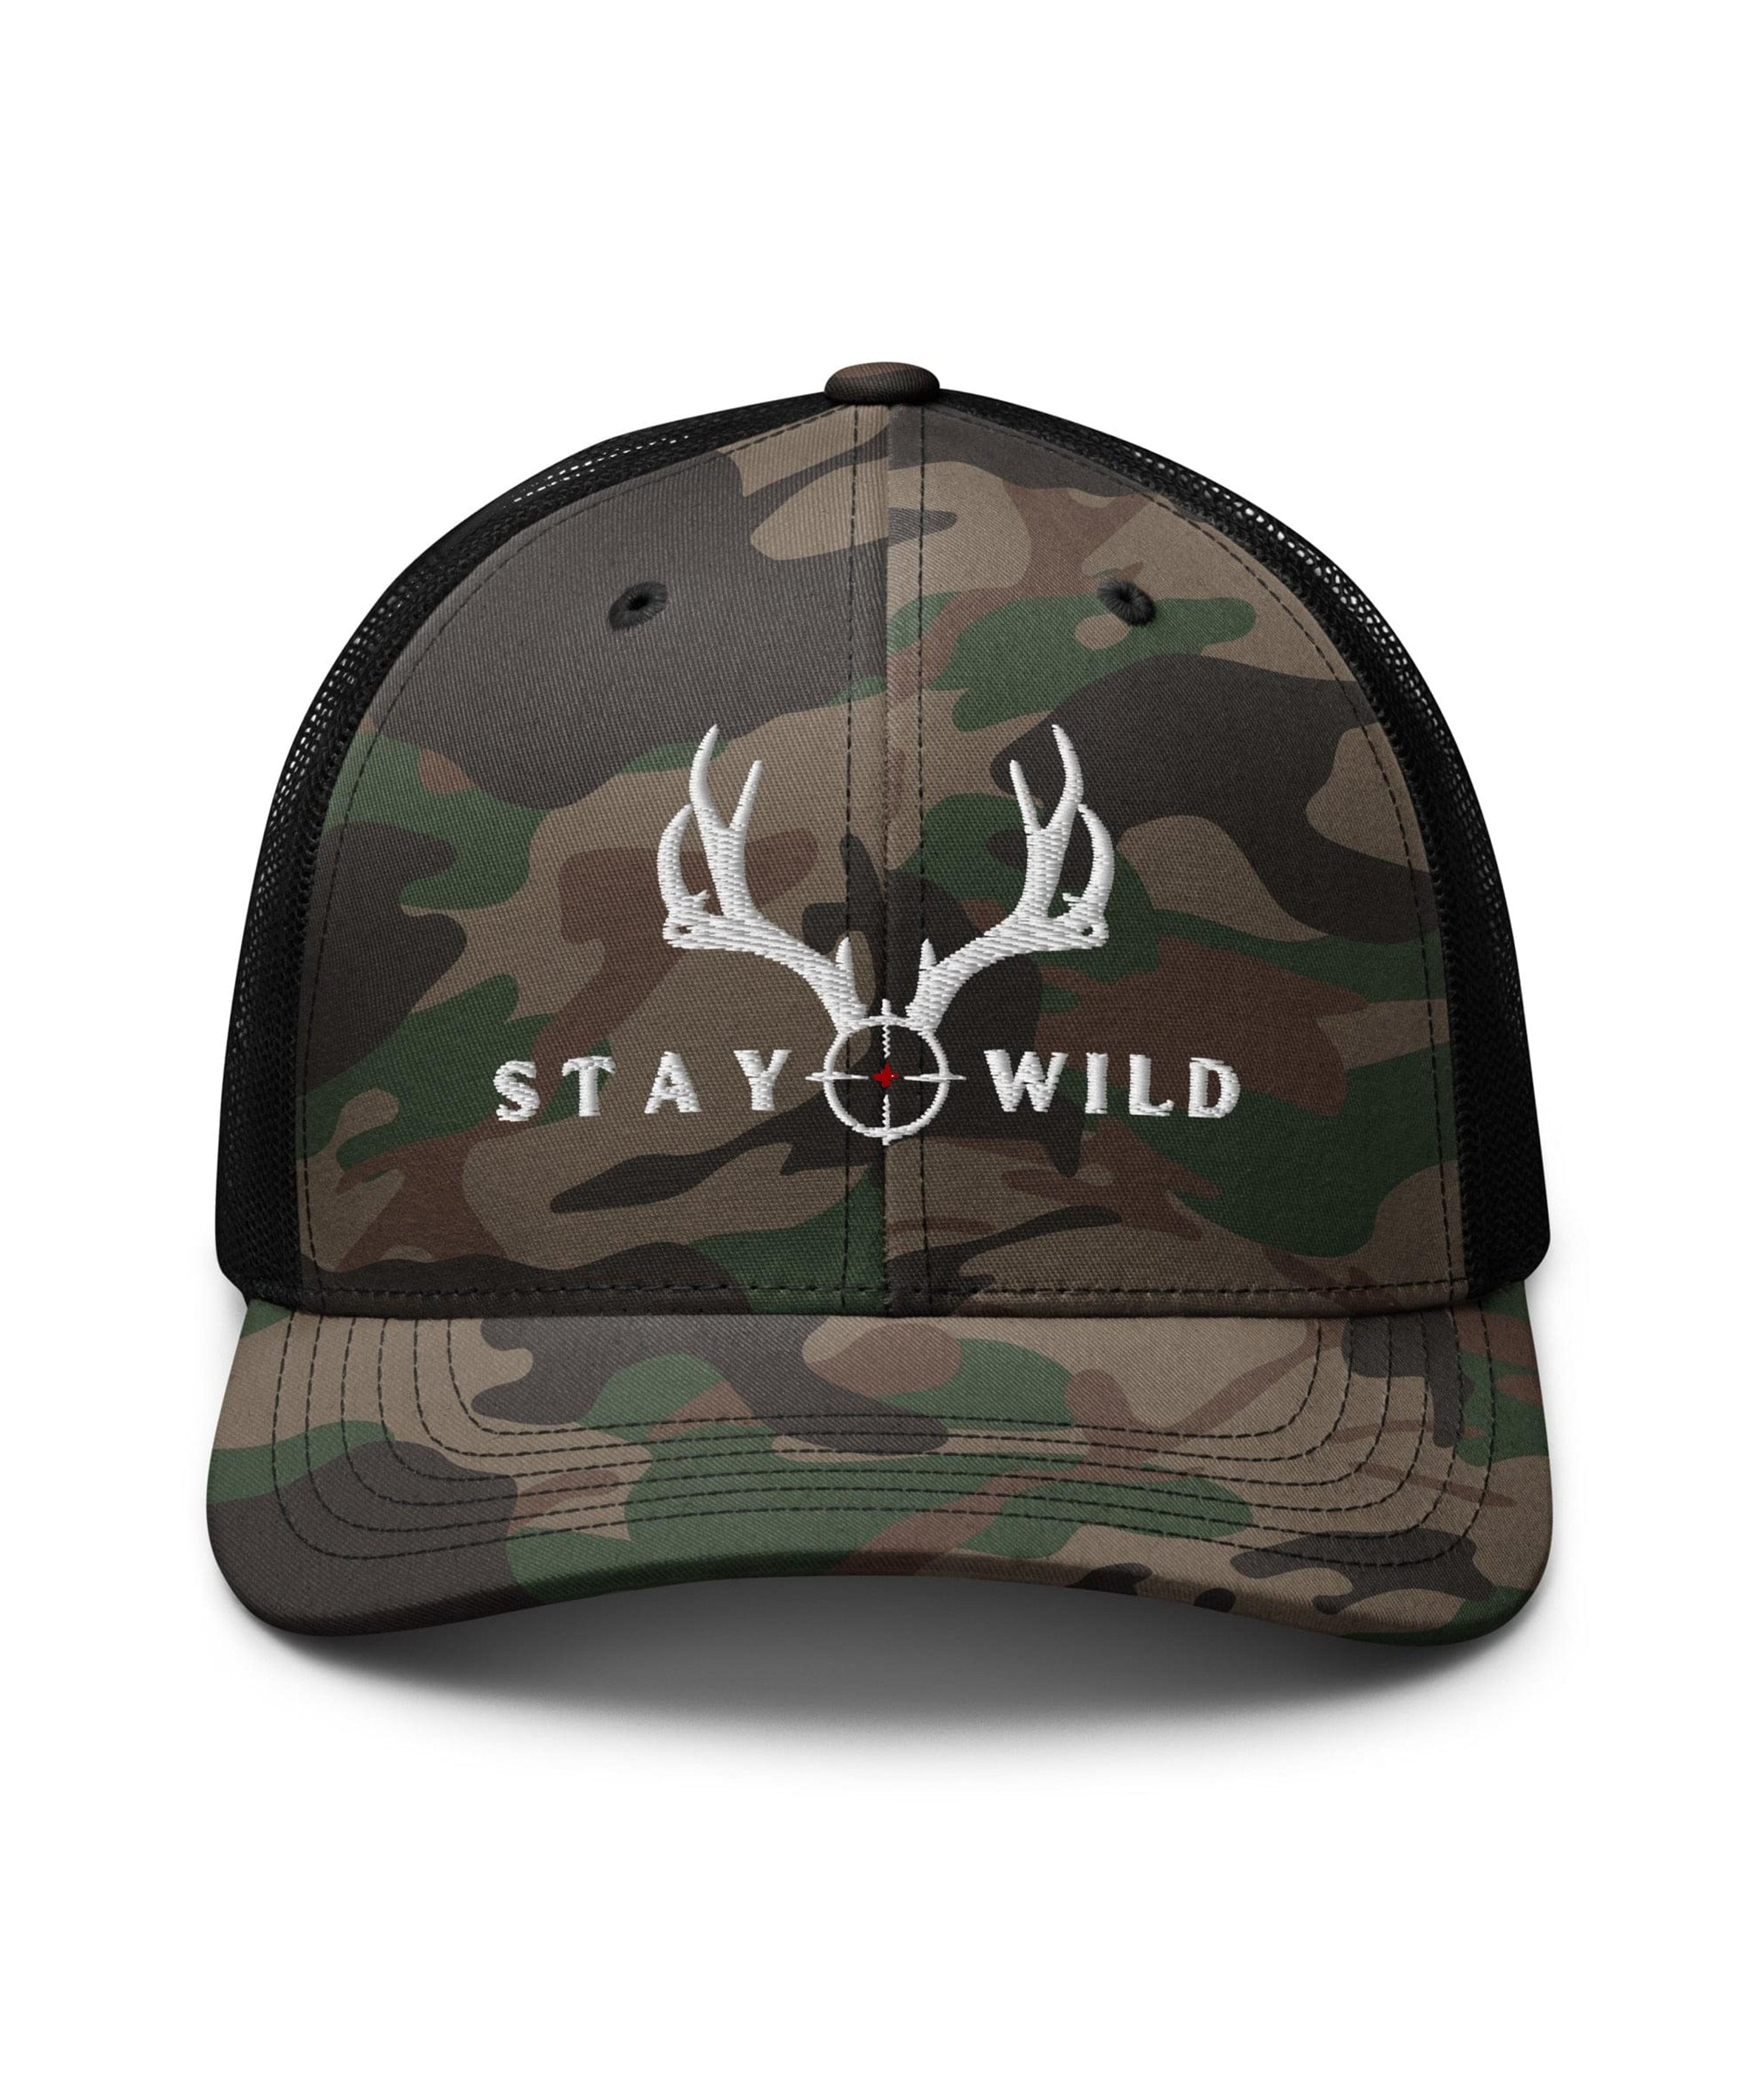 Stay Wild Camo Trucker Hat